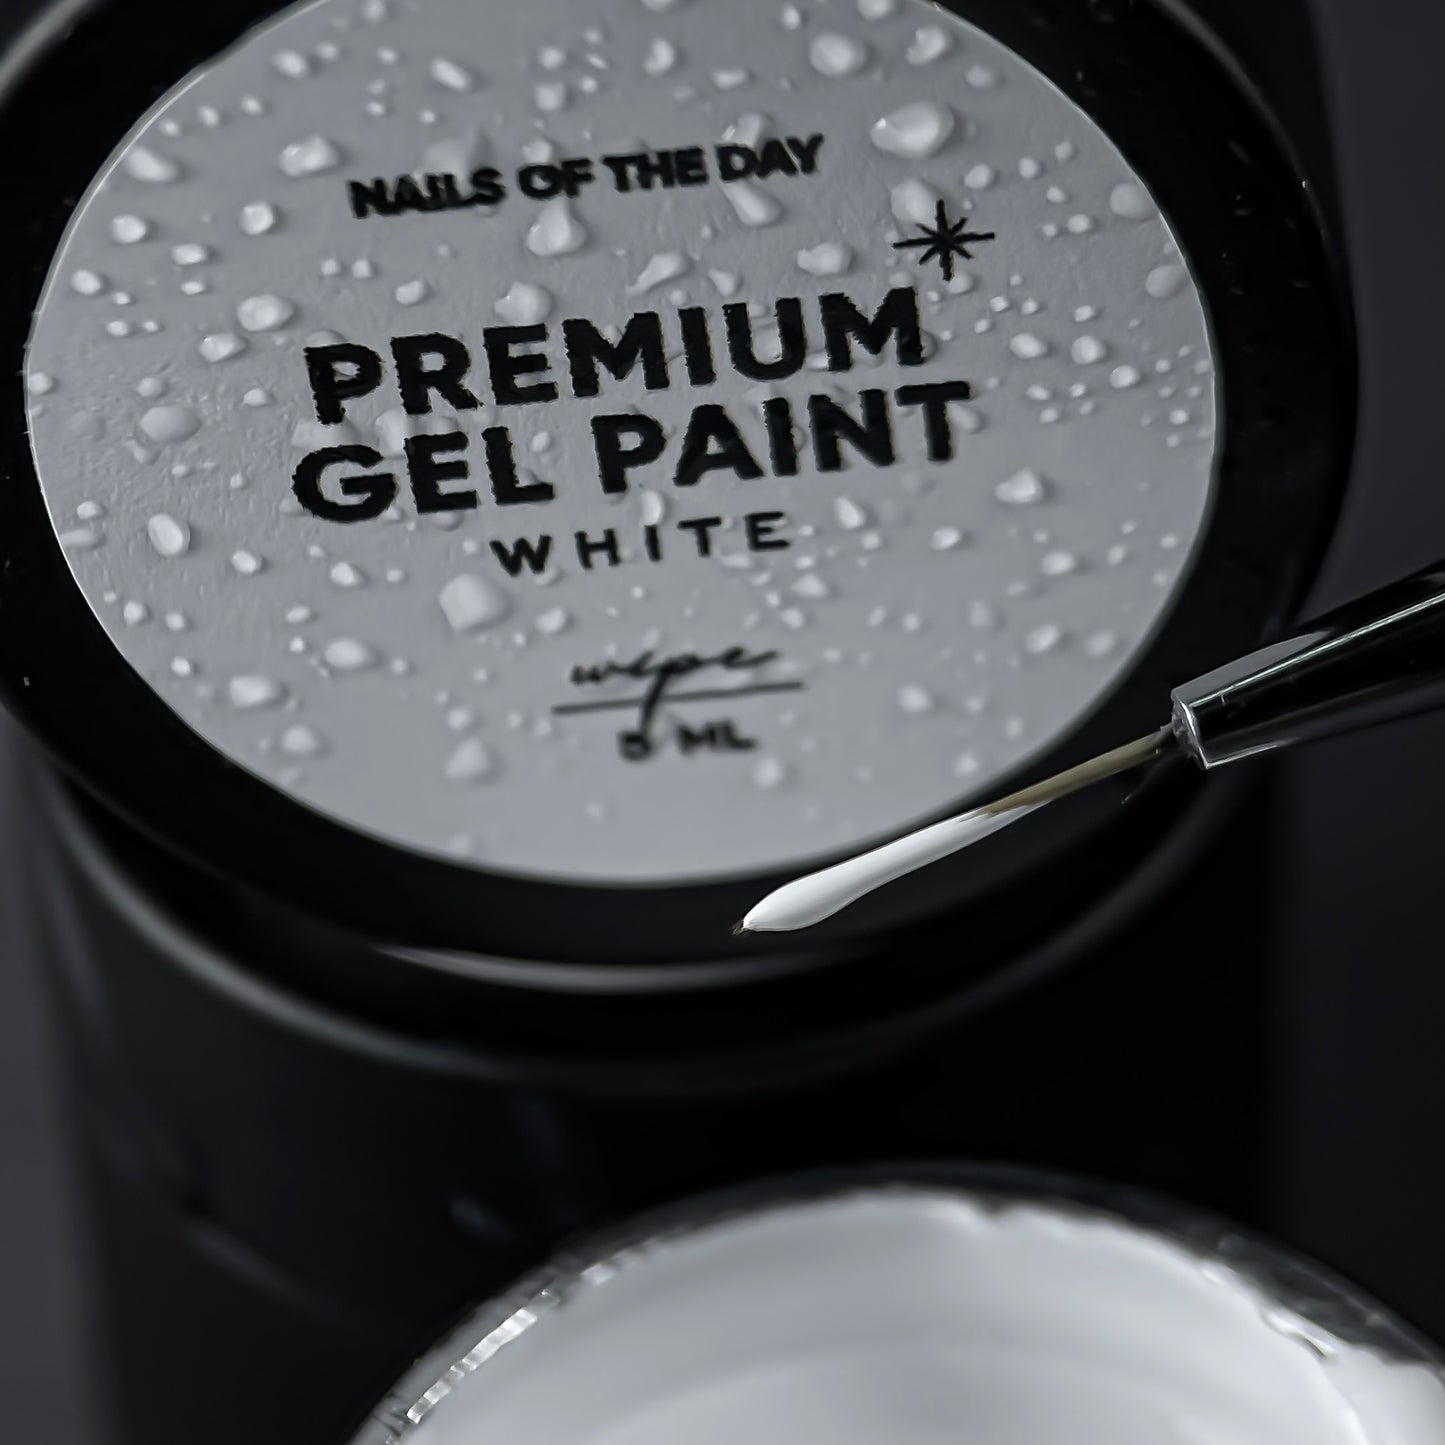 Premium gel paint White wipe 5 ml NAILSOFTHEDAY